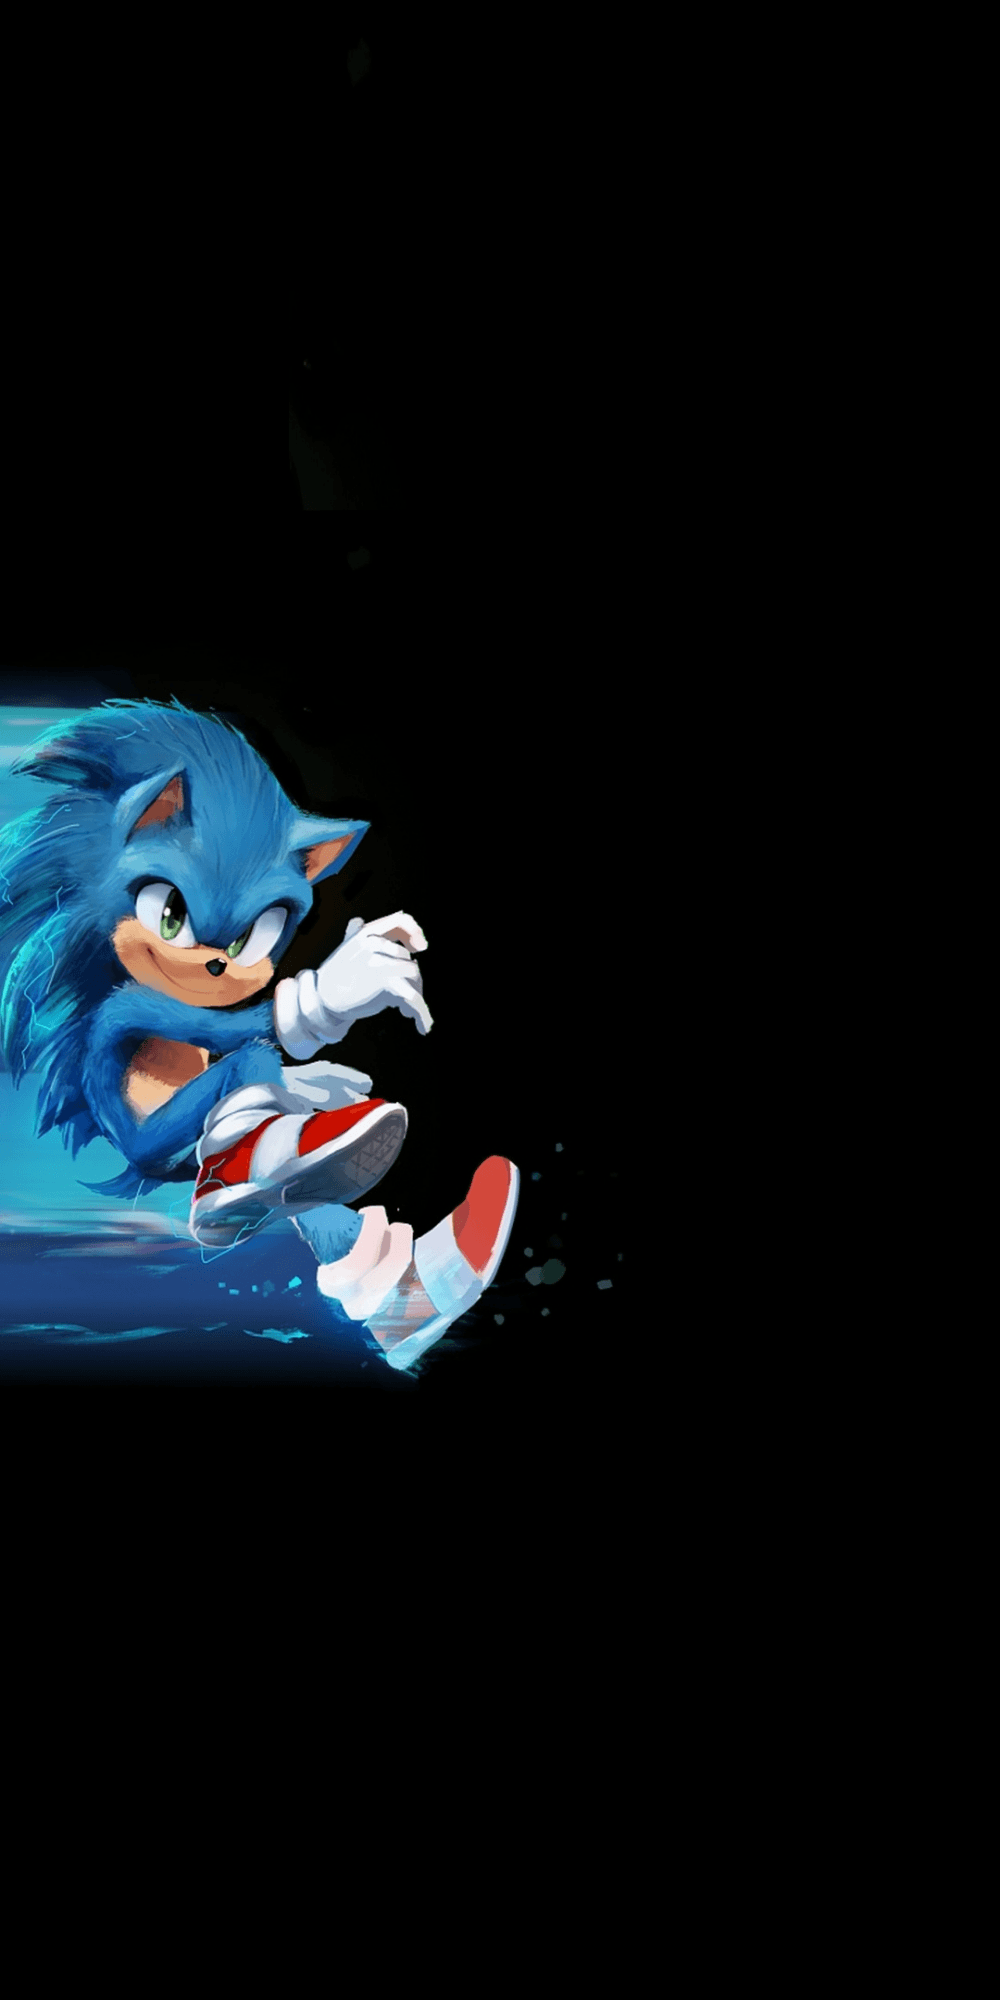 Sonic the Hedgehog, 2020 movie, art wallpaper. Desenhos